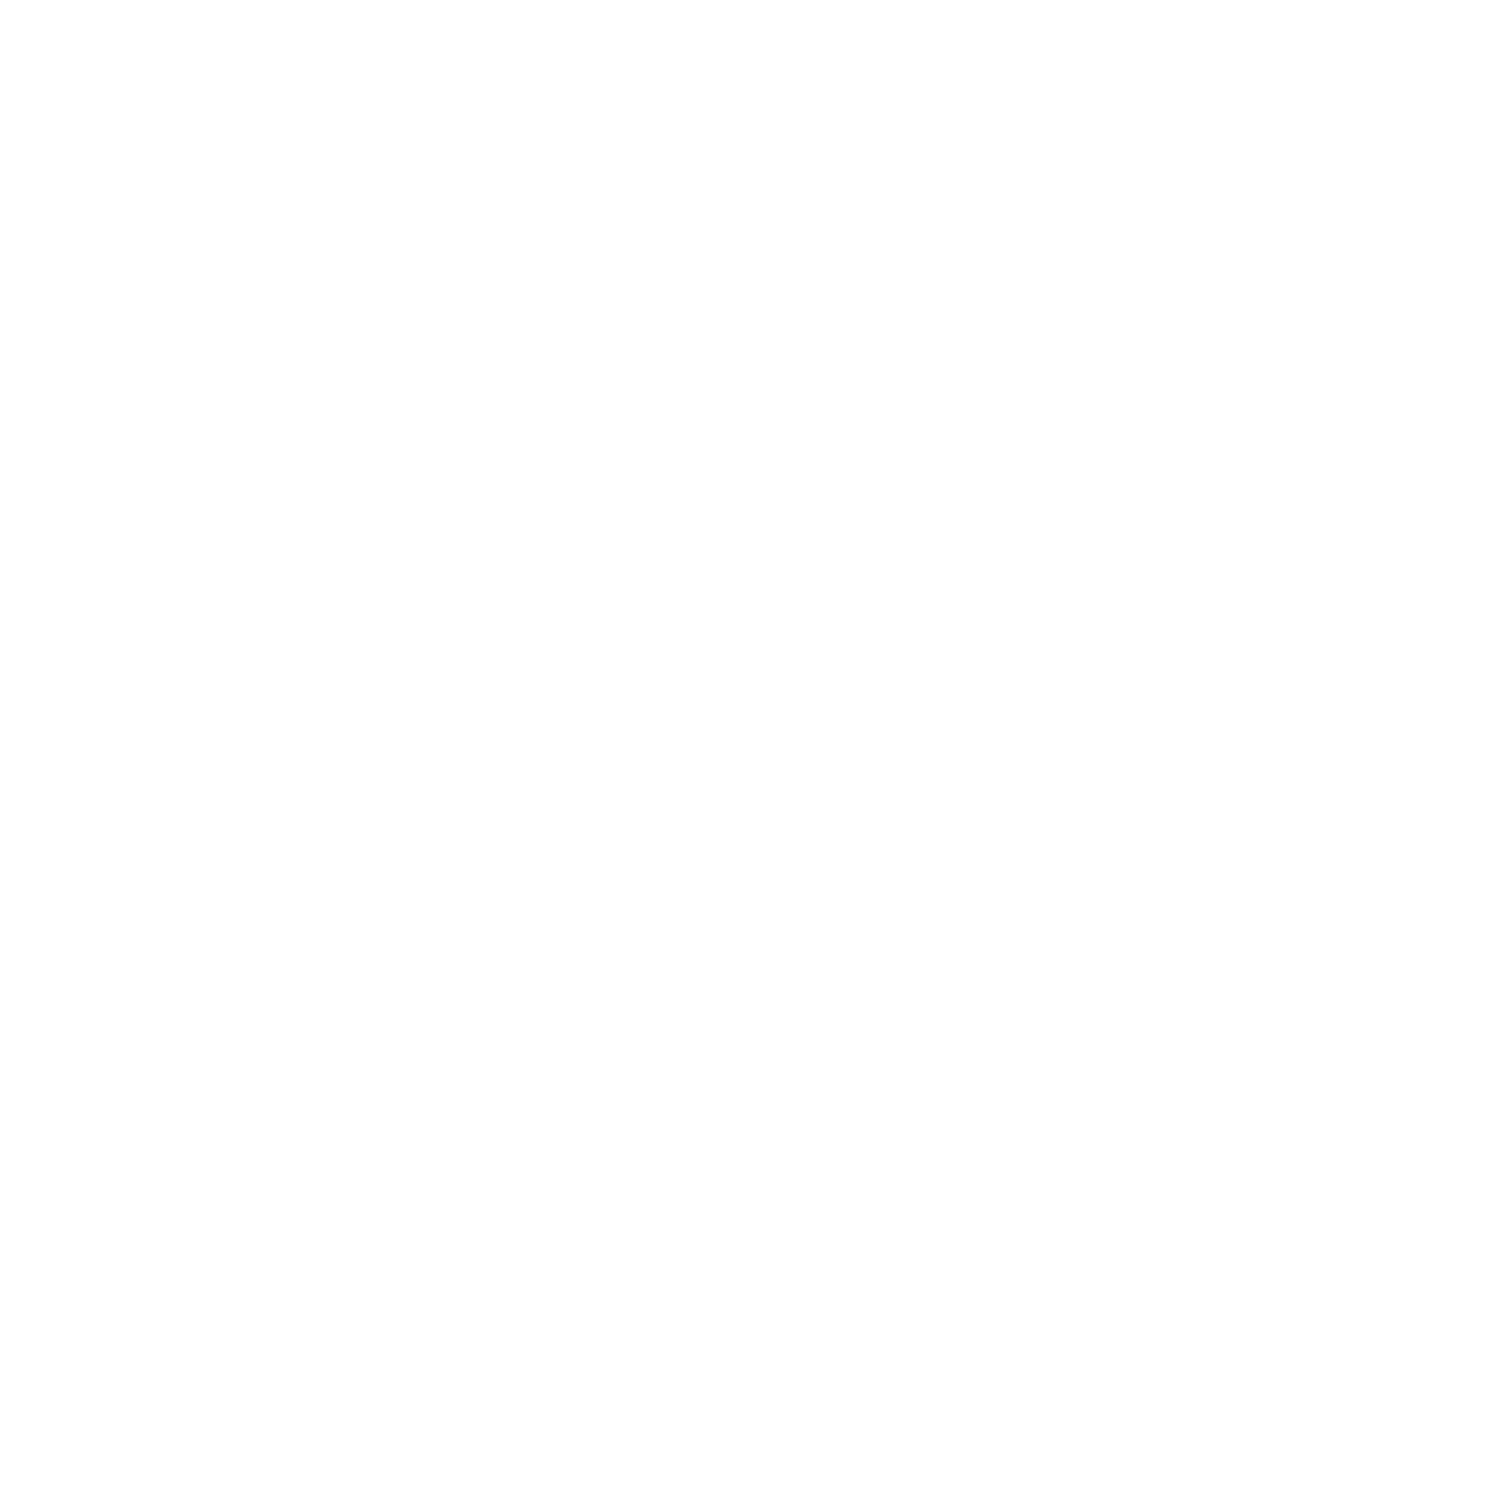 Caan Rose Estates Ltd - Slough : Letting agents in Ruislip Greater London Hillingdon